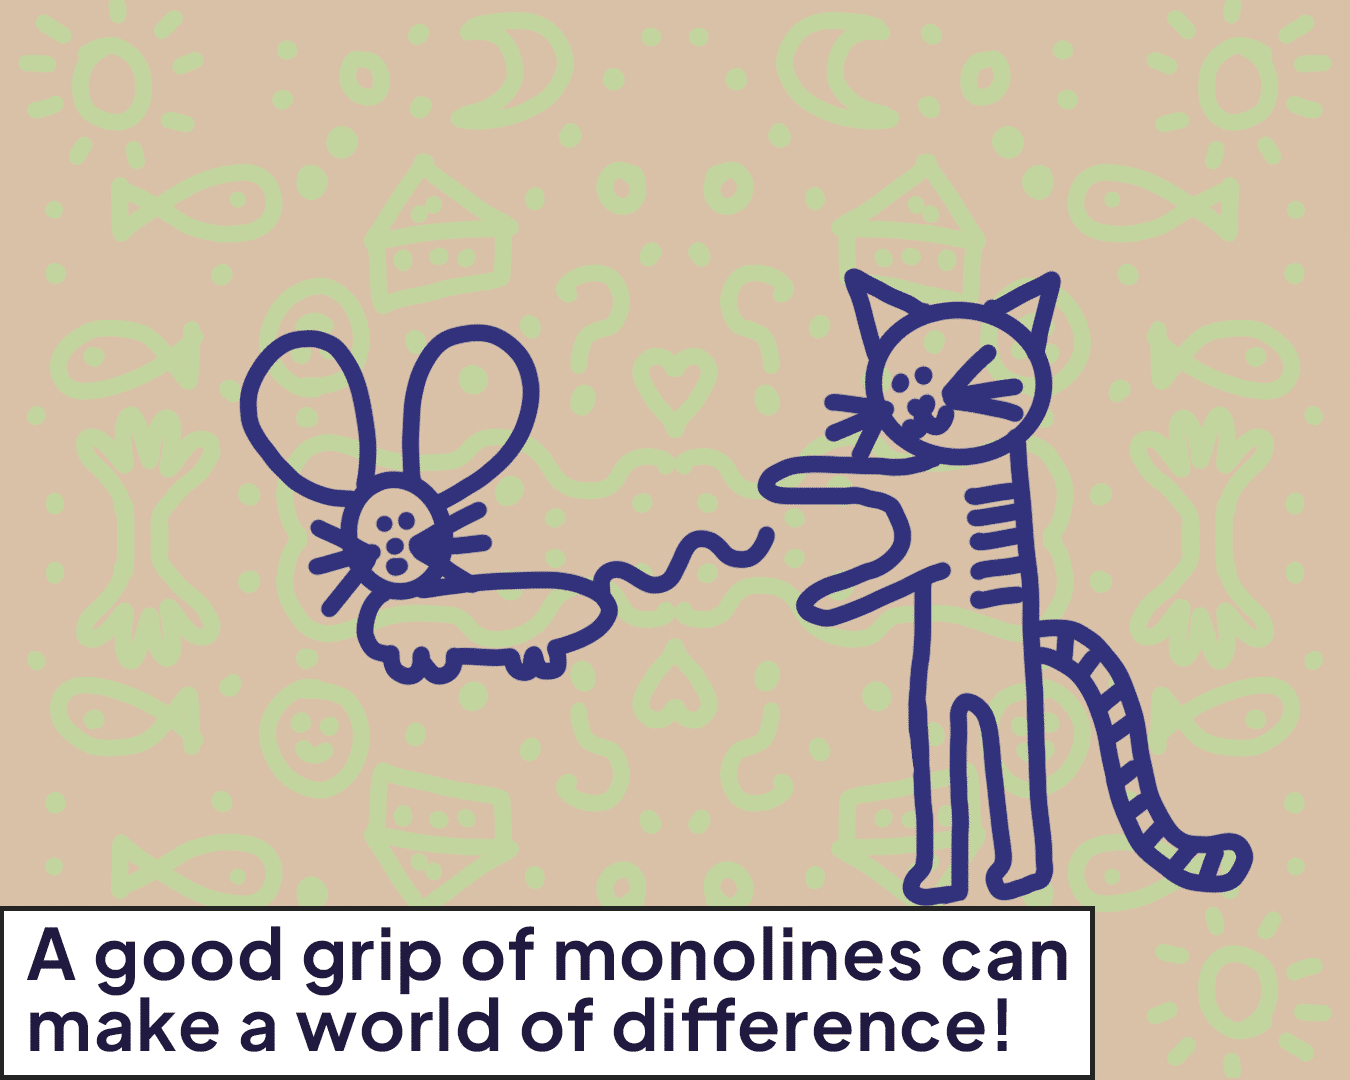 Grip of monolines